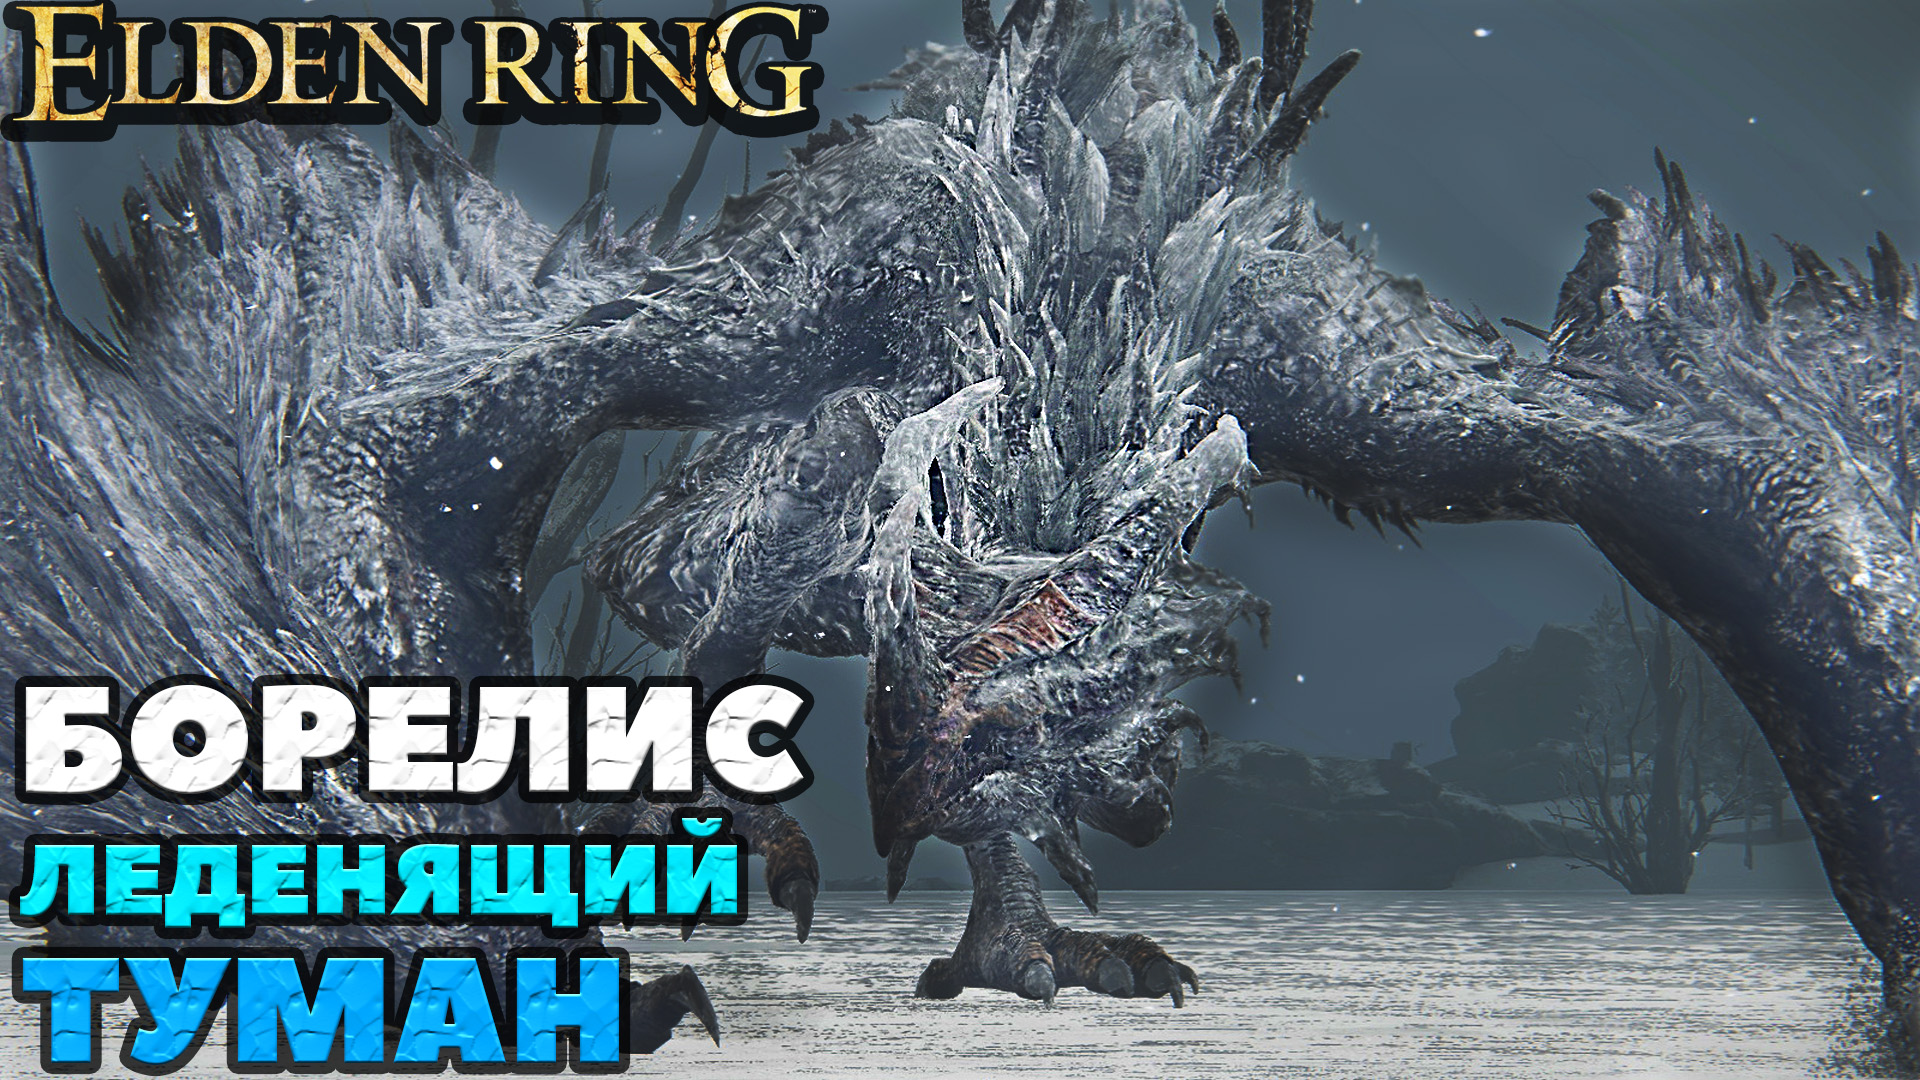 Elden Ring - Дракон Борелис Леденящий Туман(Borealis, the Freezing Fog).